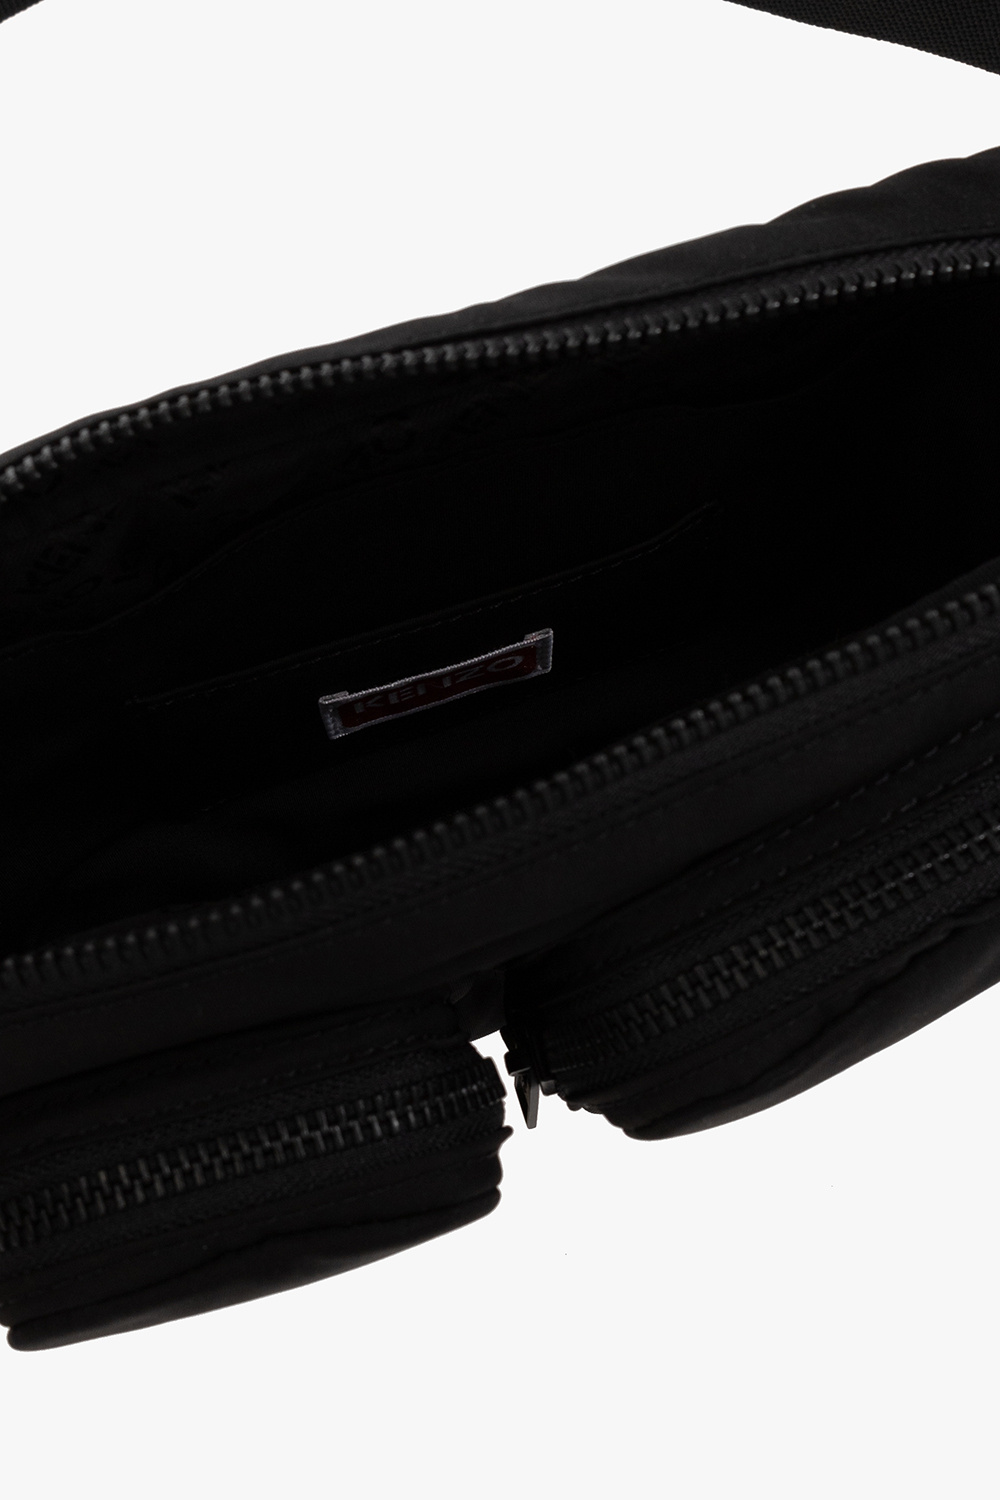 Kenzo Alexander Wang Scrunchie leather top handle bag